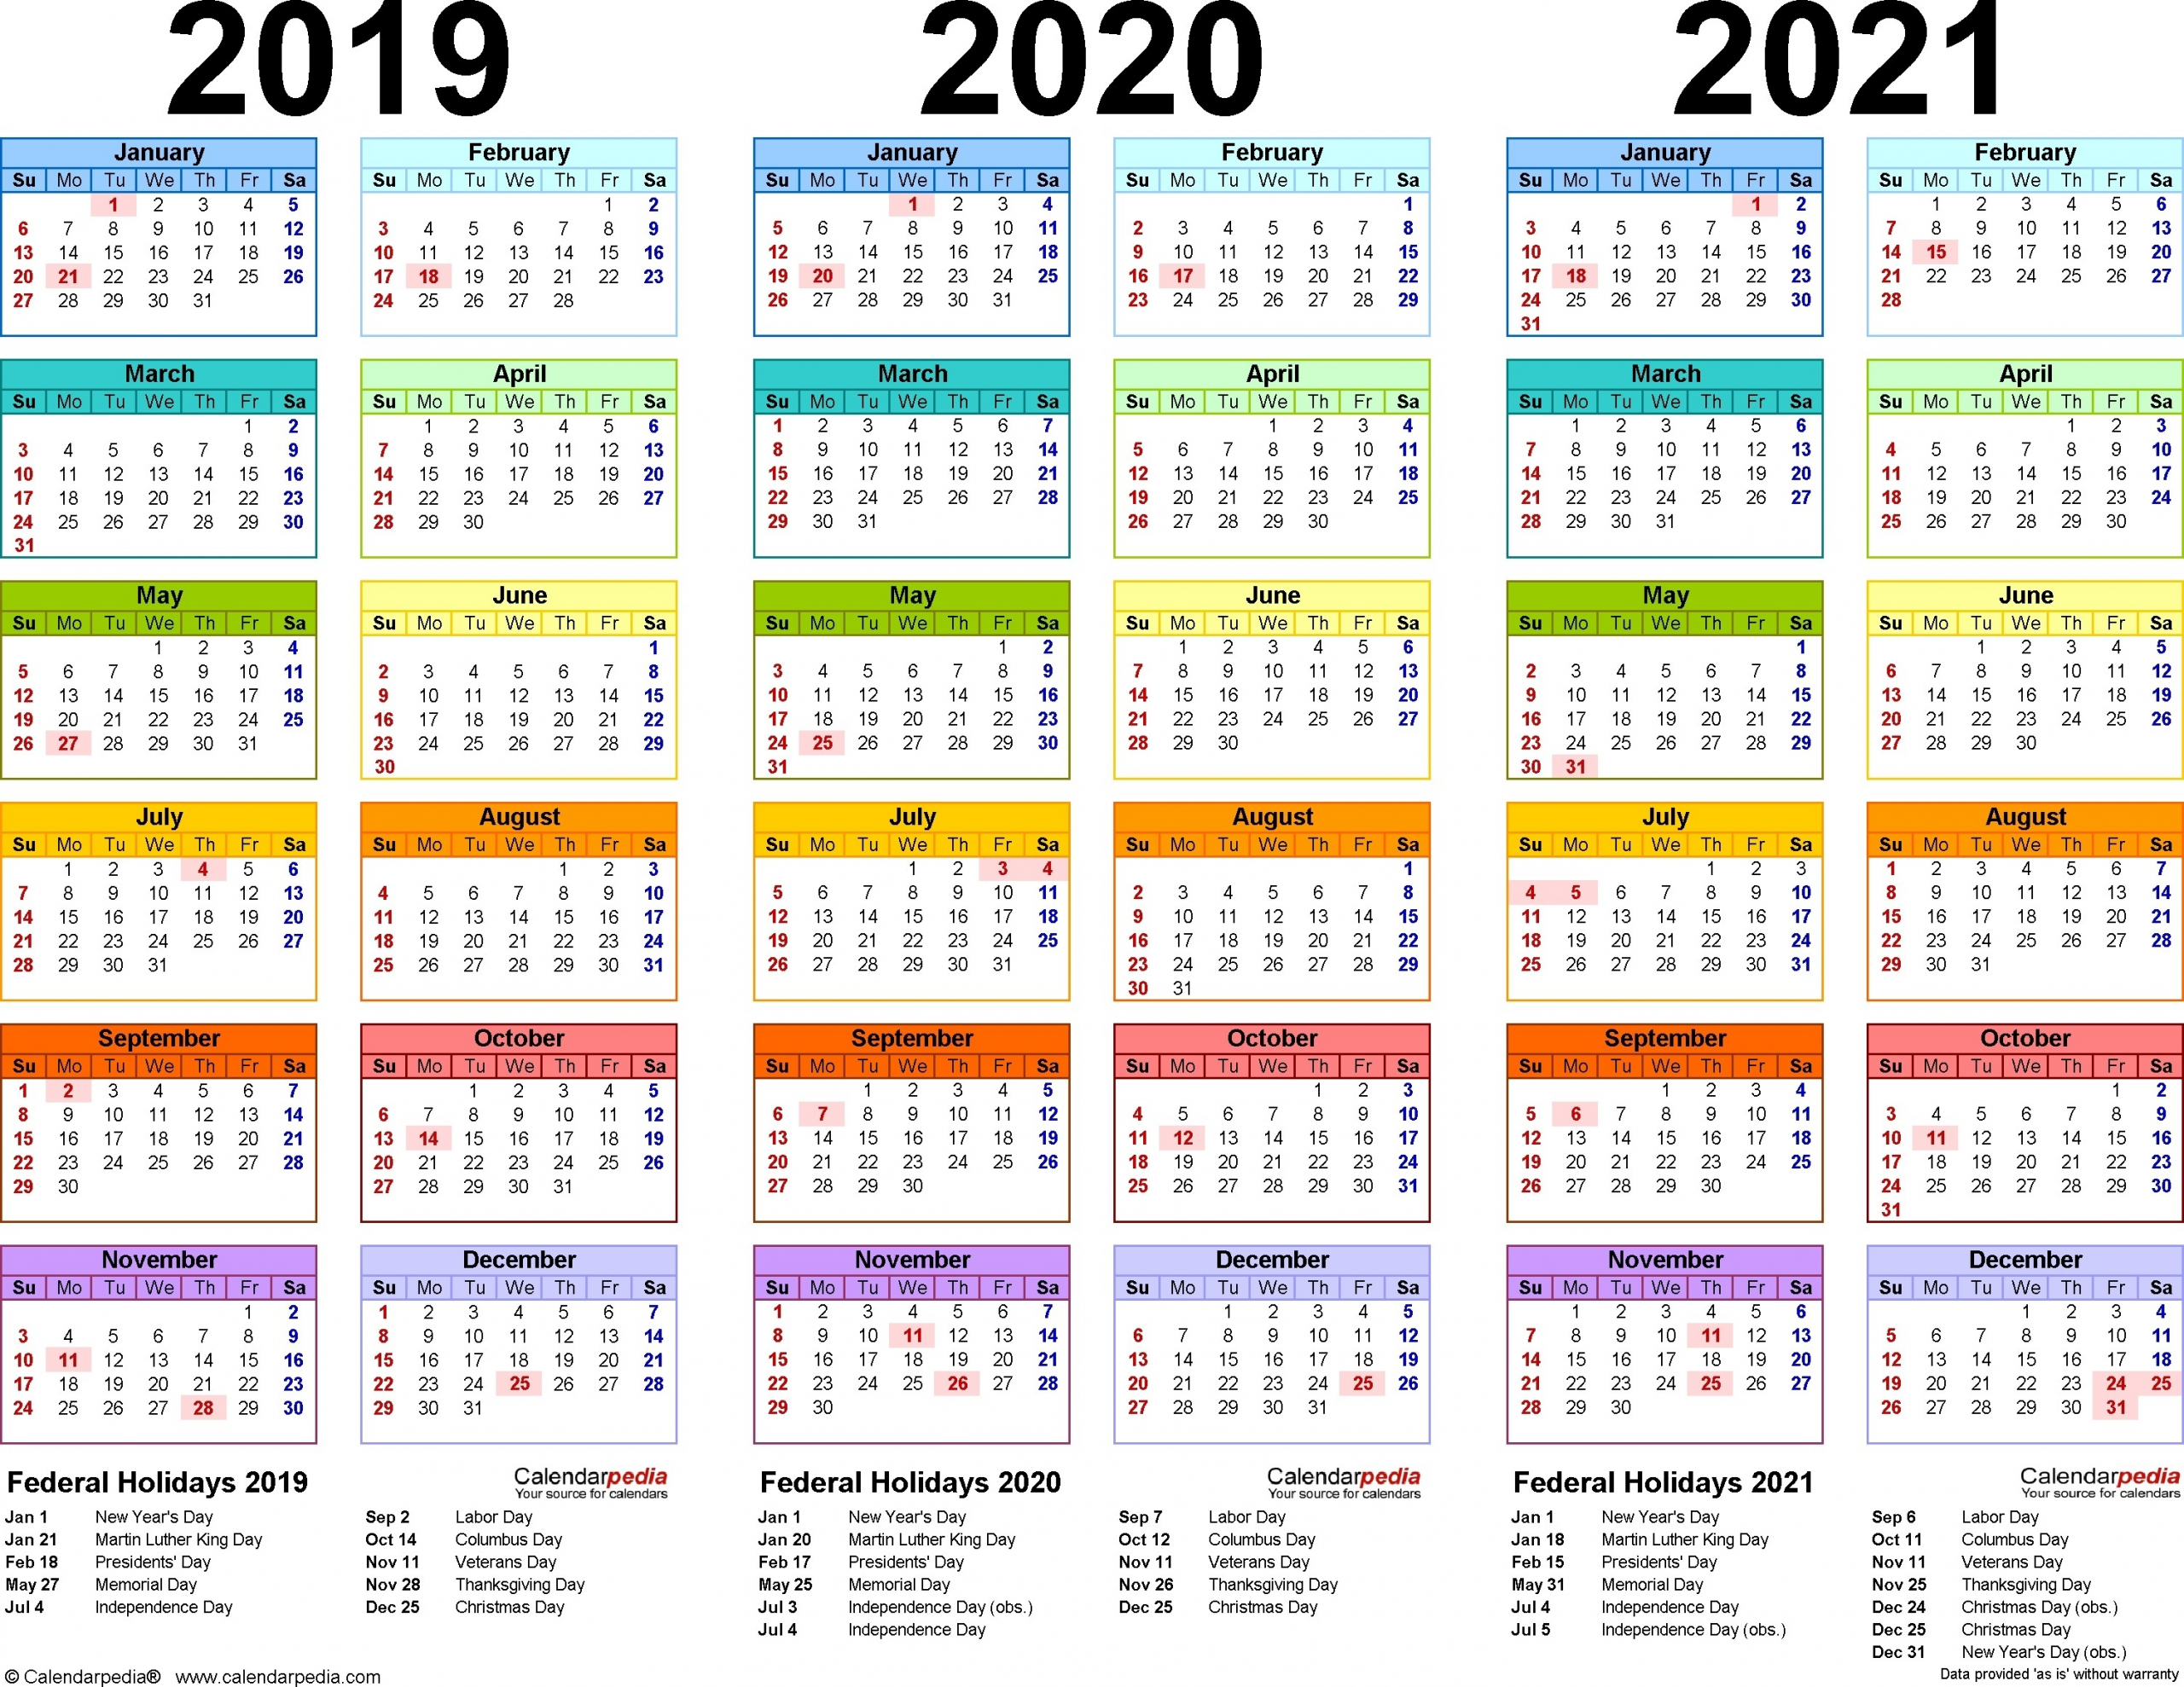 Pick Malayalam Calendar 2021 August